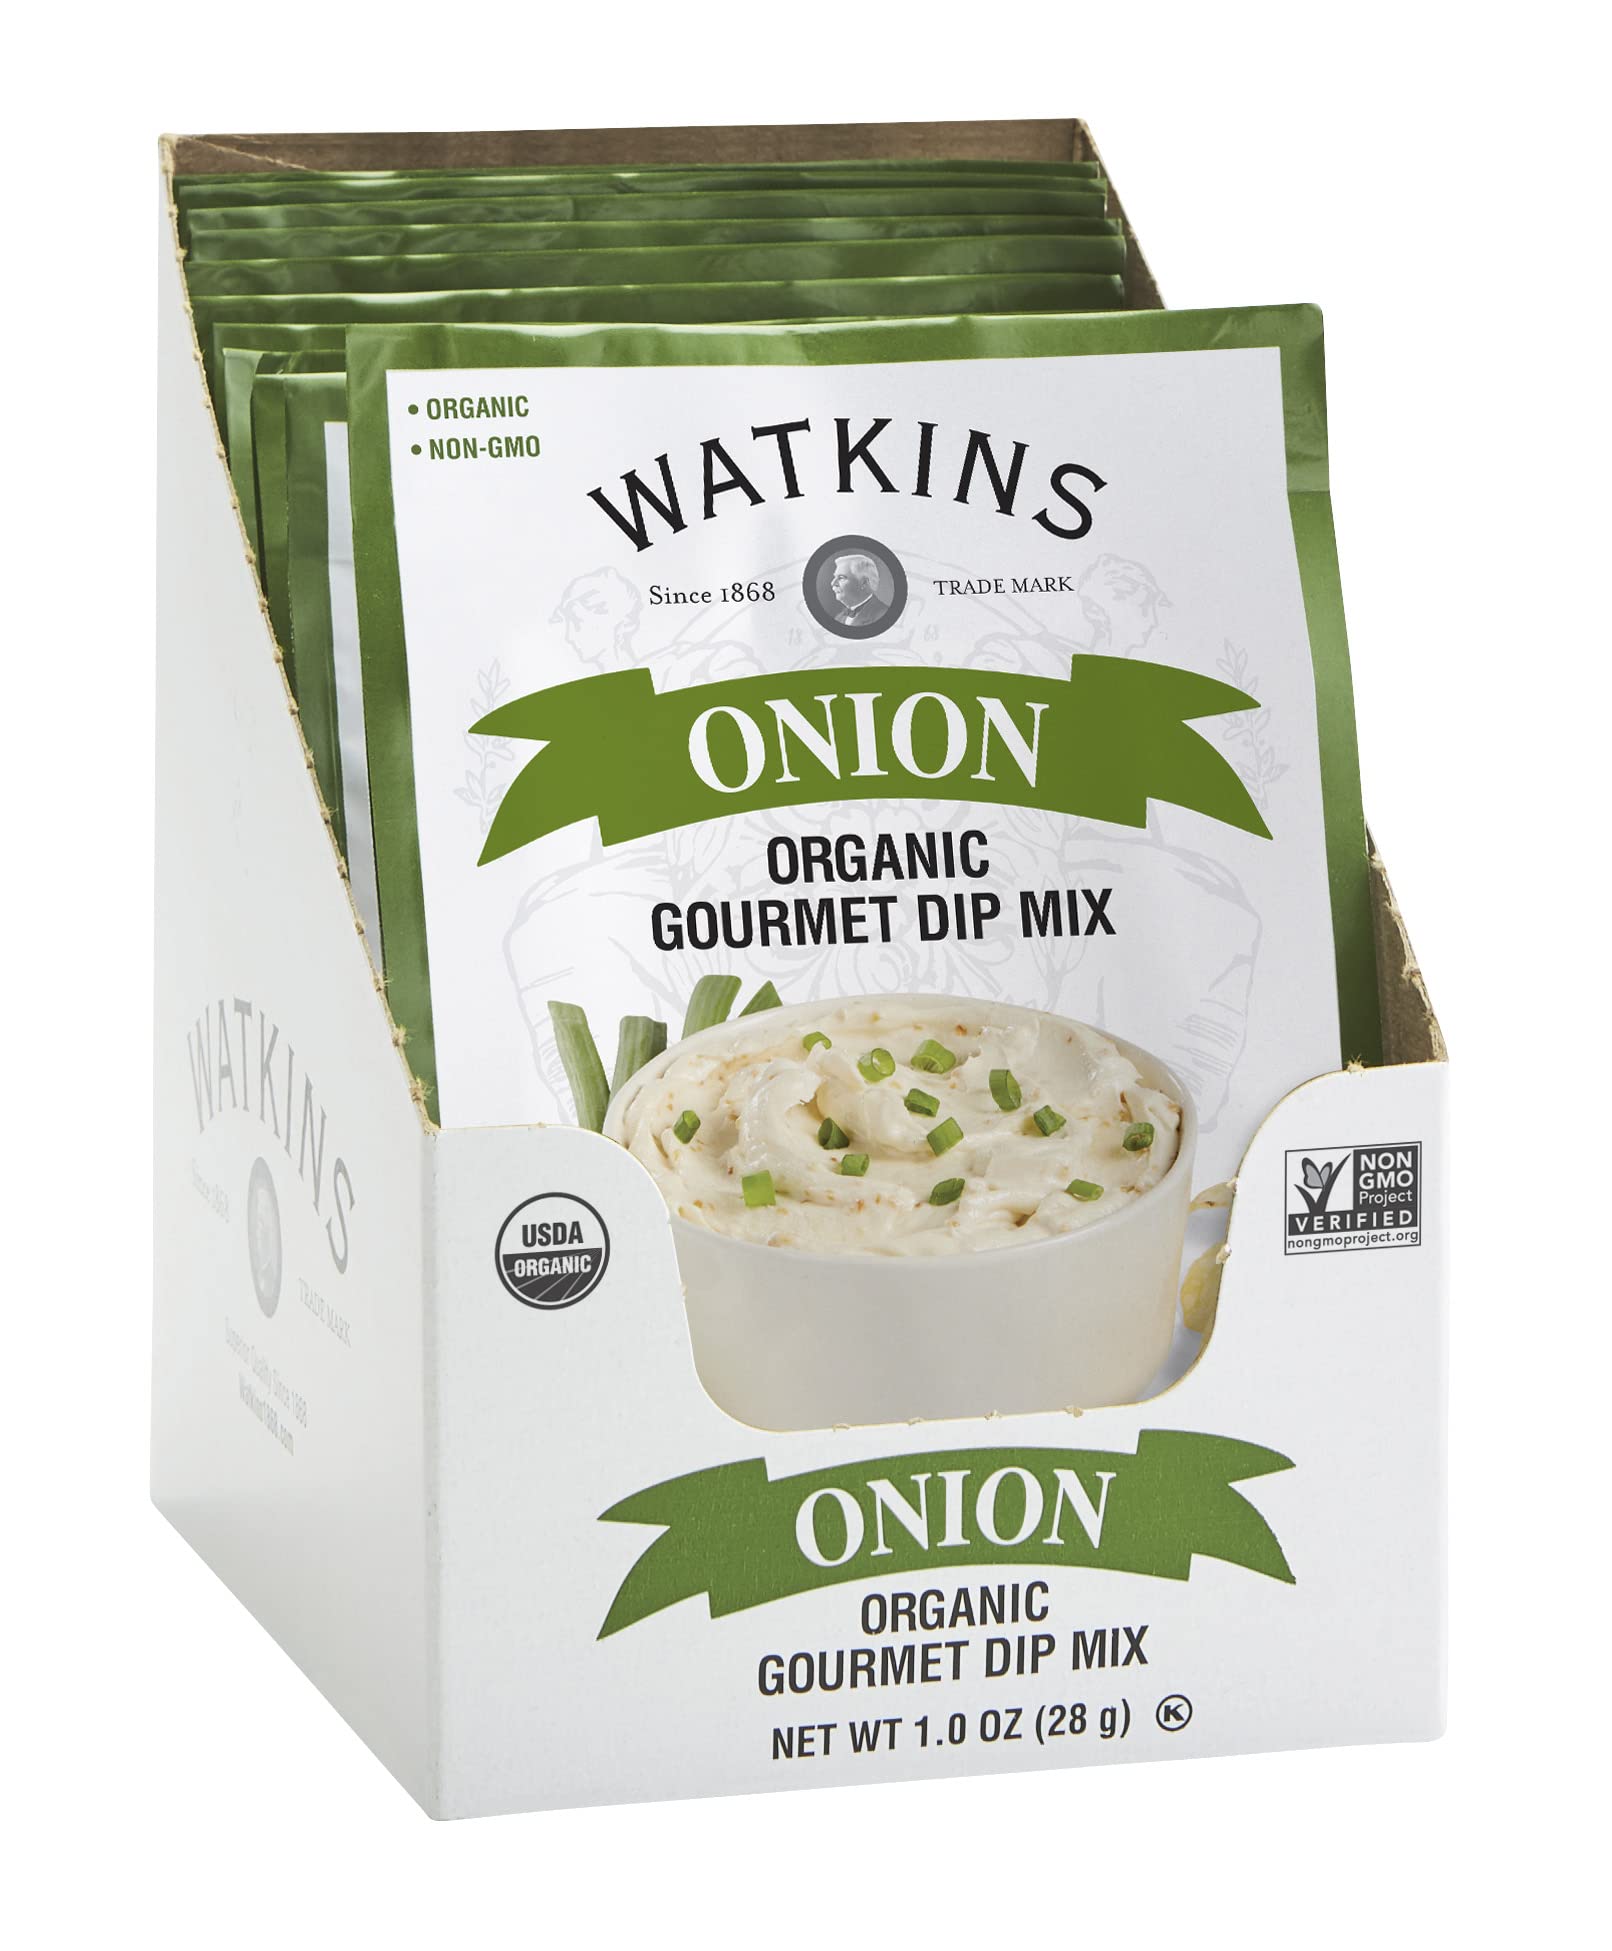 Watkins Organic Gourmet Dip Mix, Onion, 1.0 oz. Packets, 12-Pack Onion -  Organic 1 Ounce (Pack